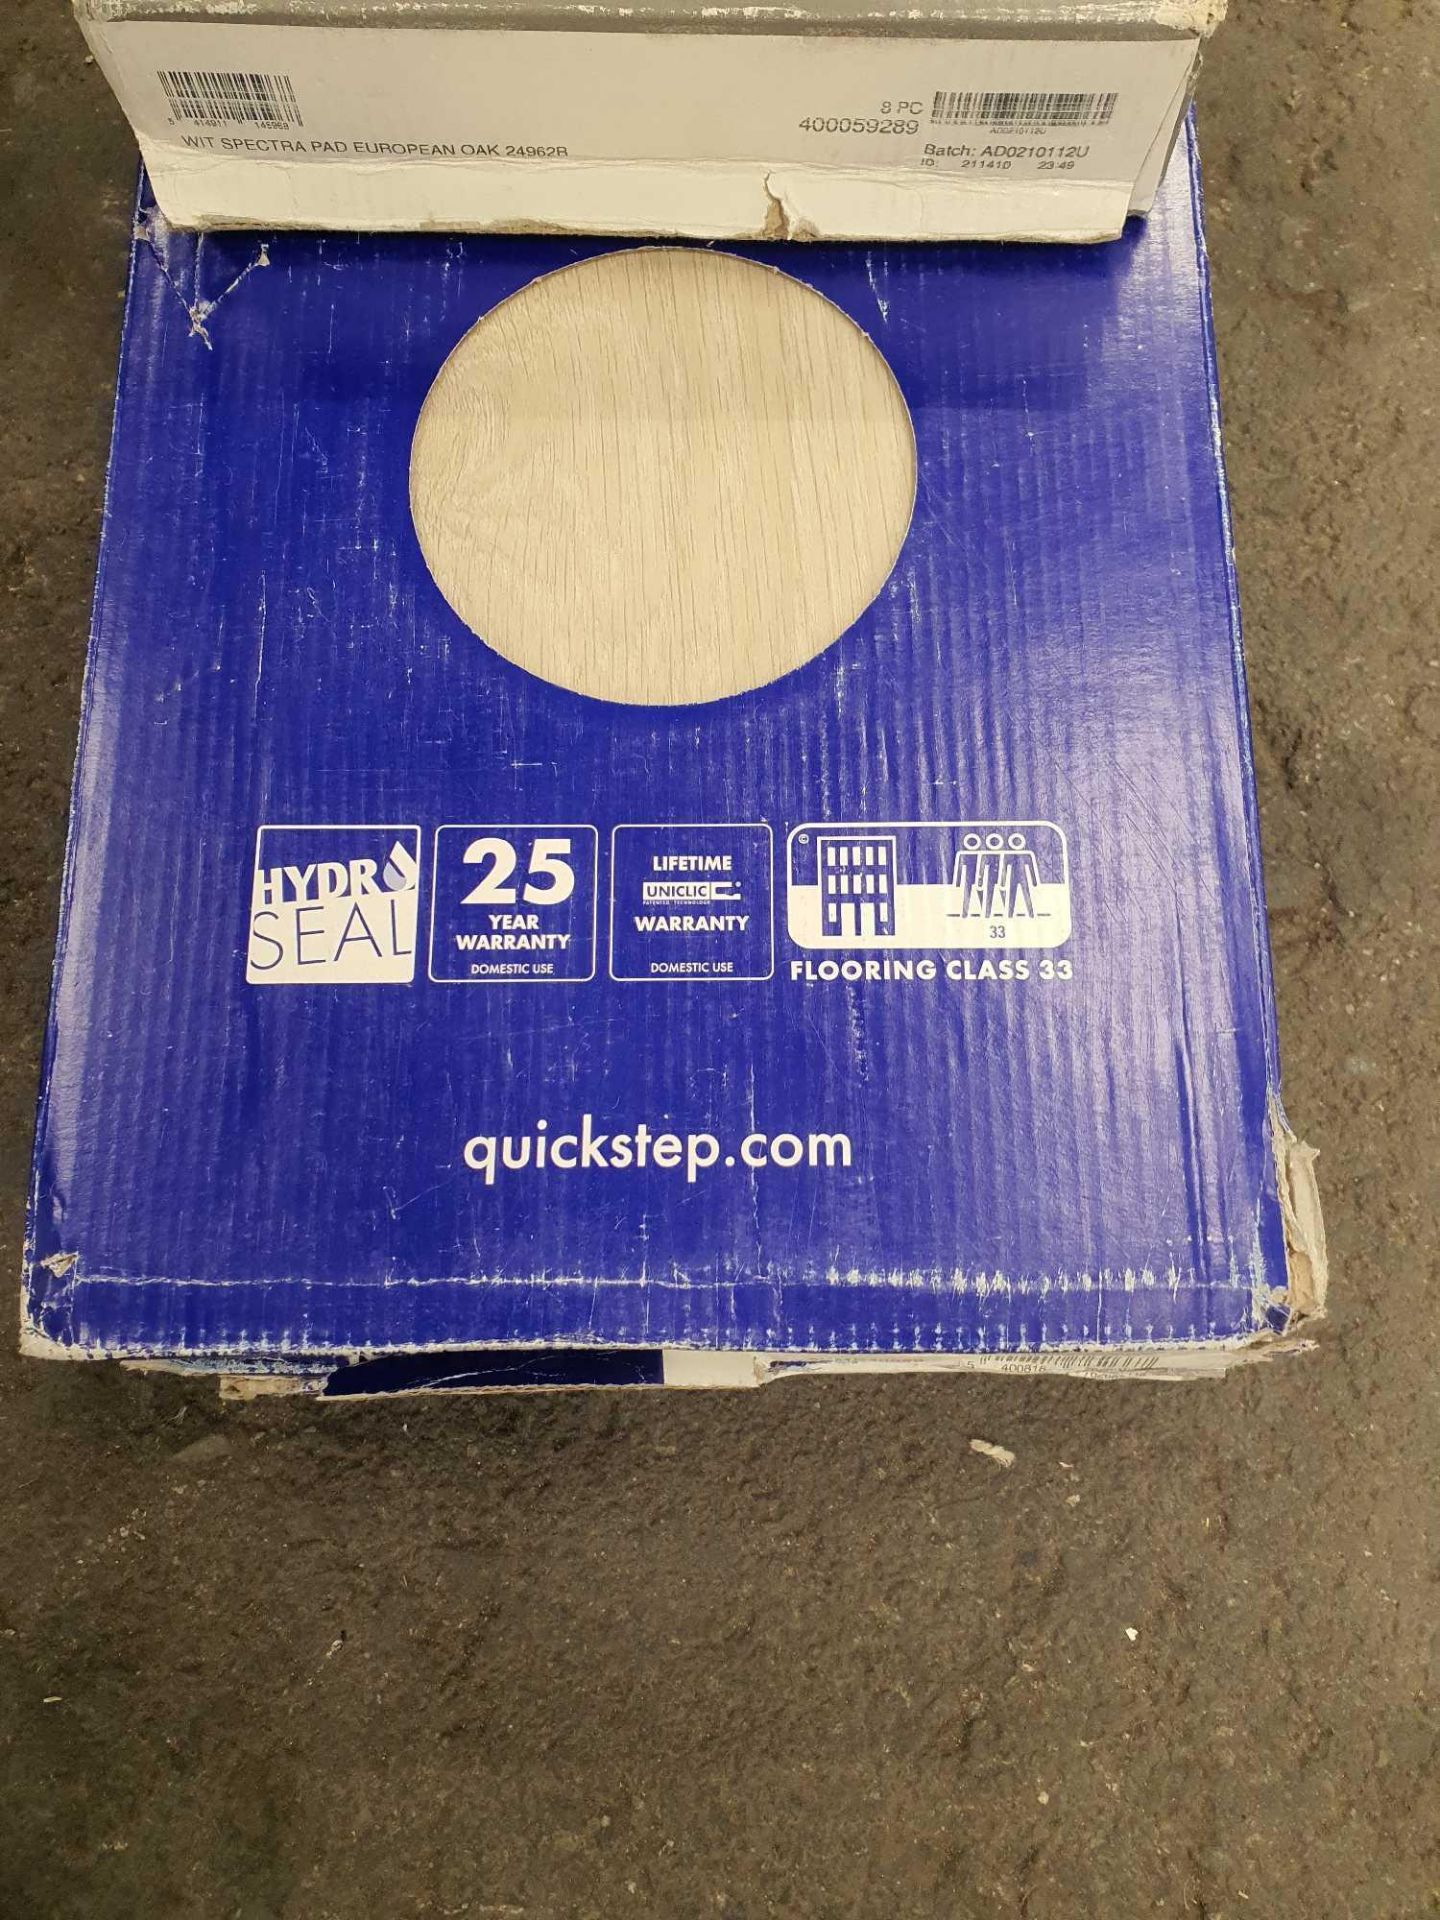 5 Packs of odd laminate flooring 3 packs are the Same